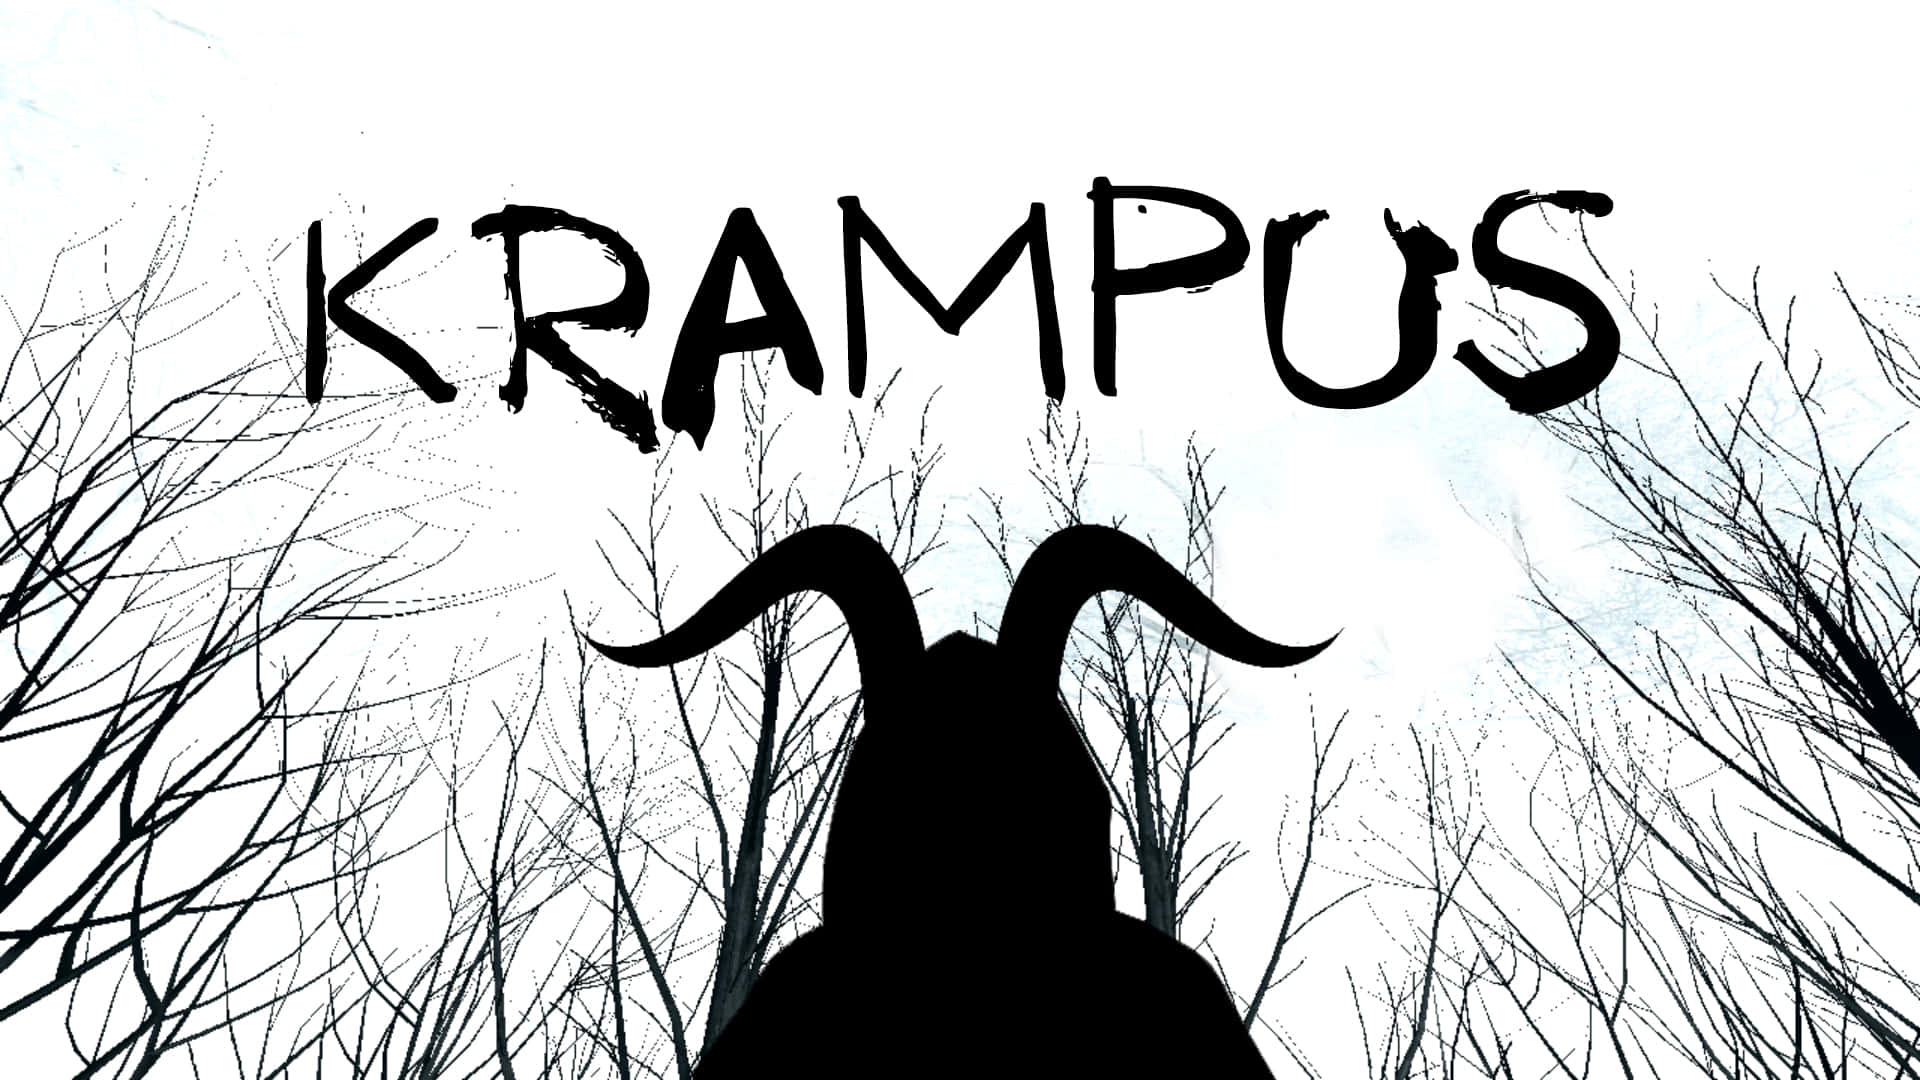 "The legendary Krampus is here!" Wallpaper